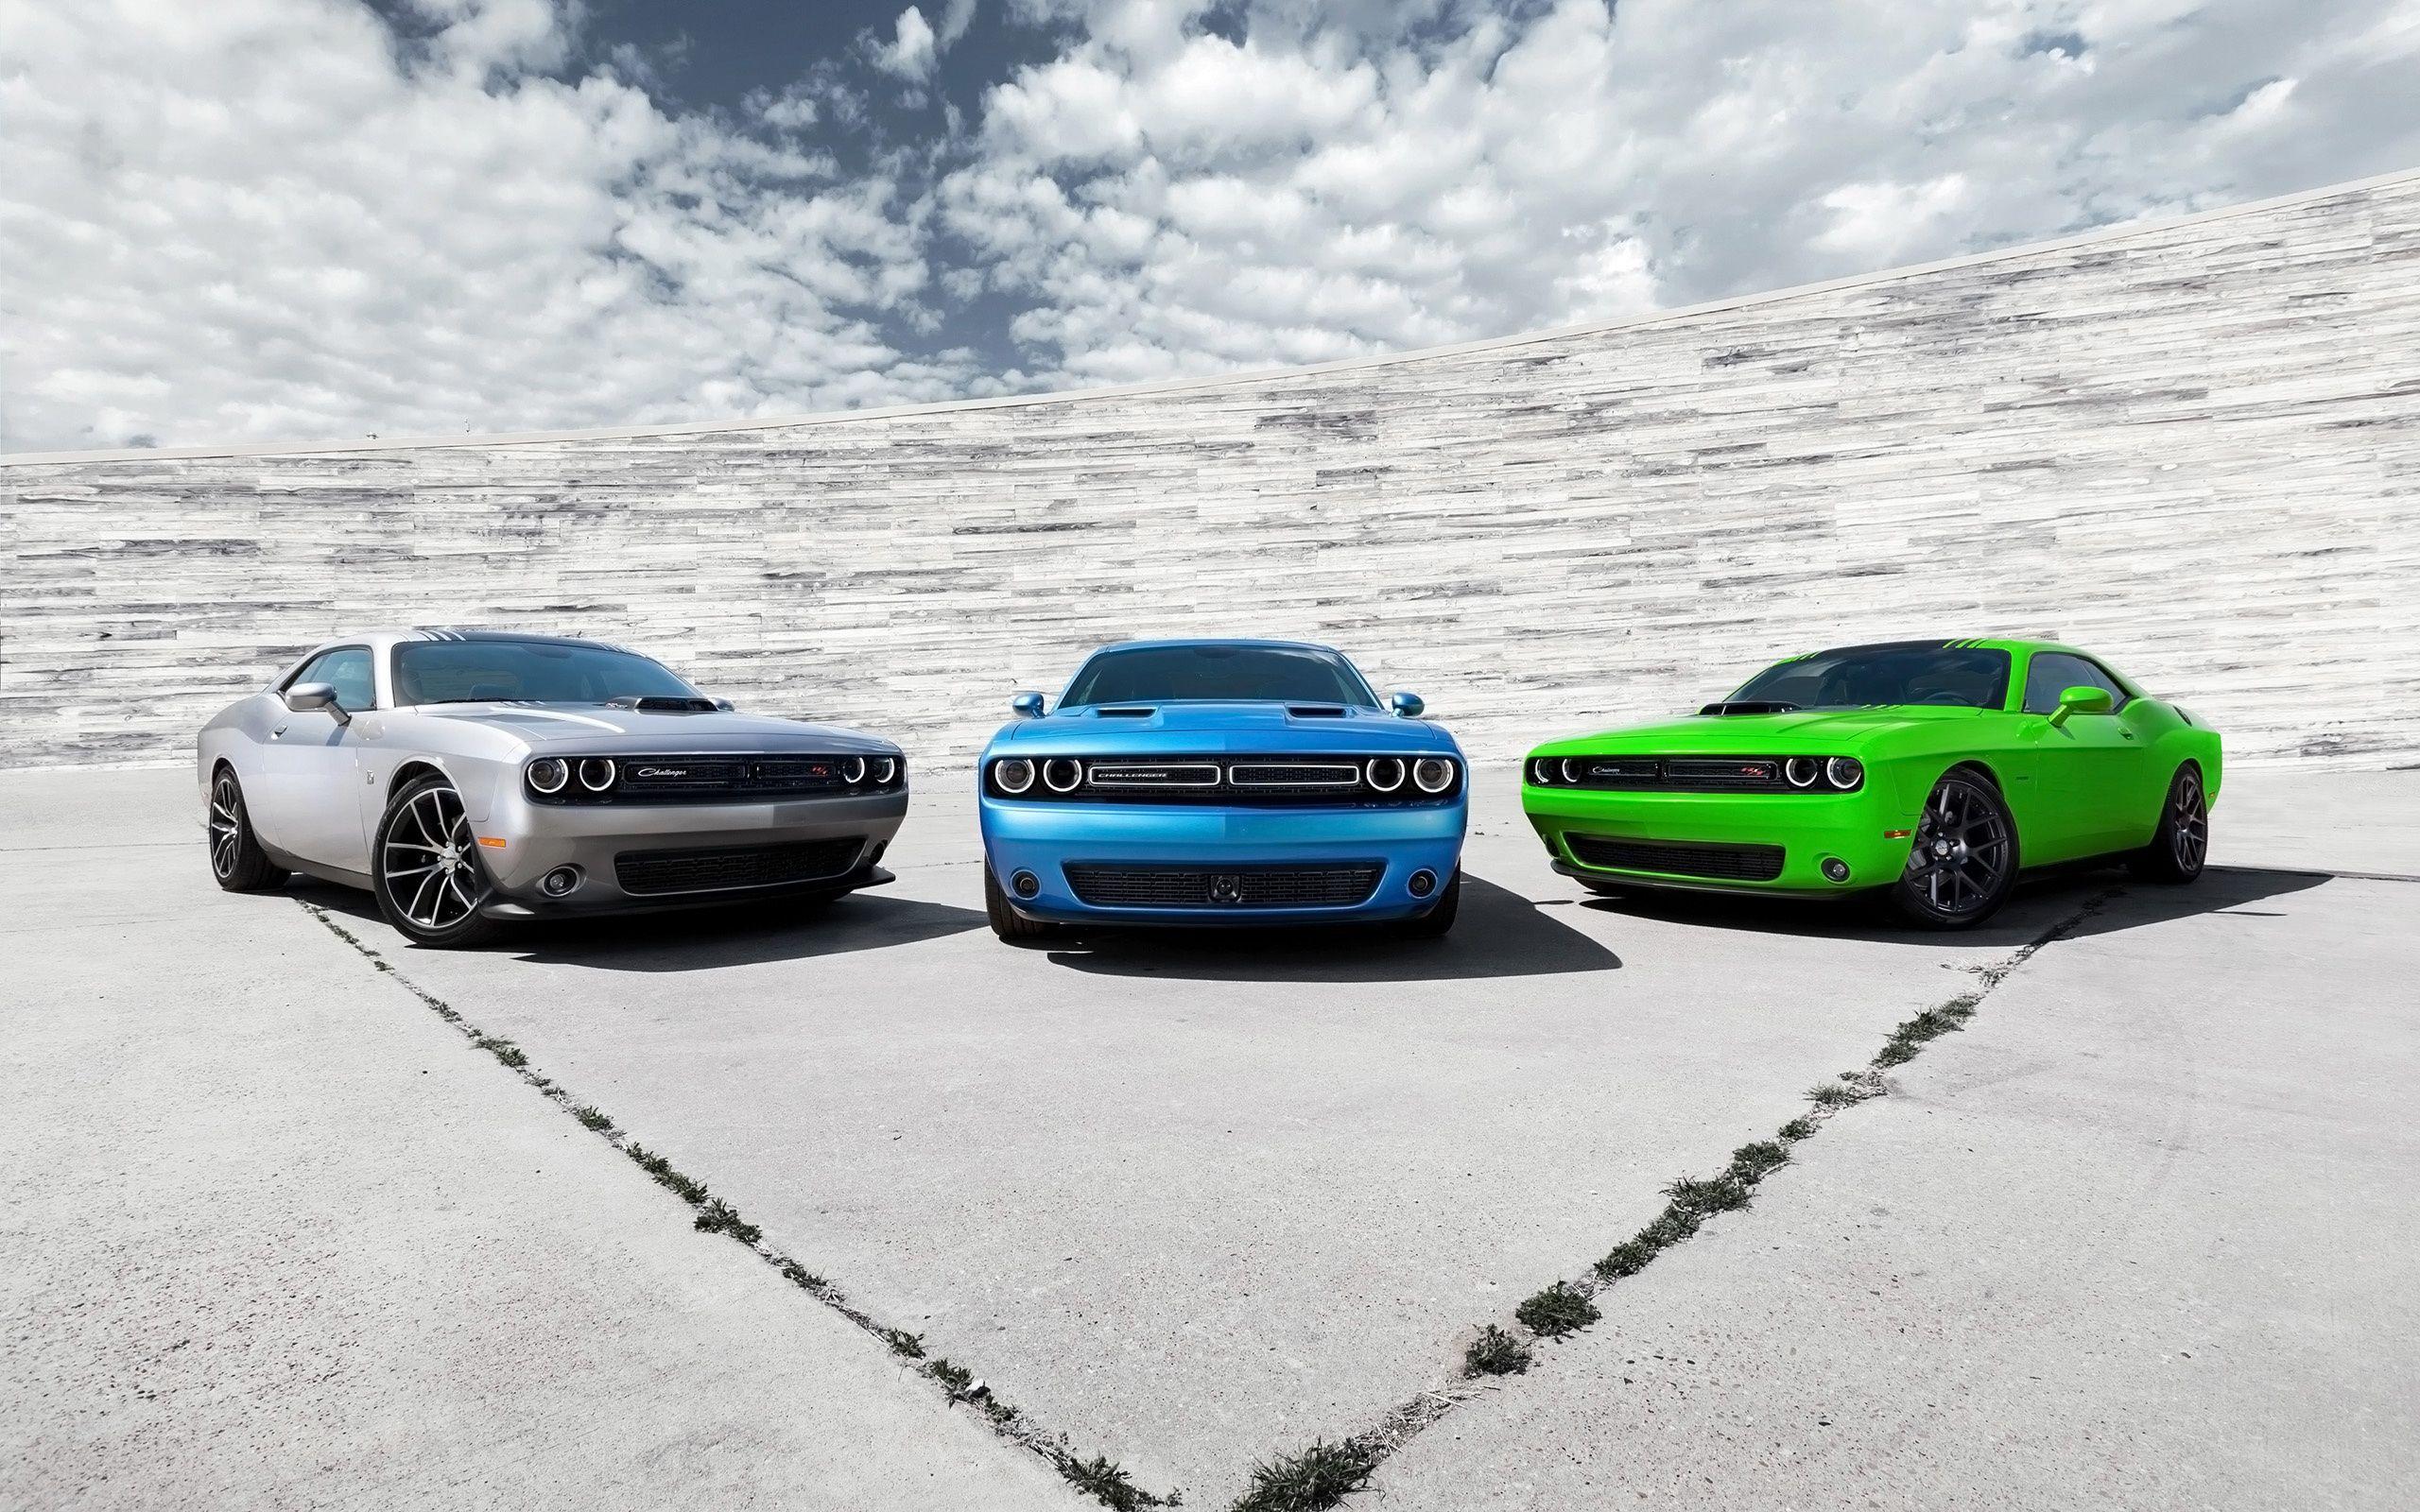 Dodge Challenger Cars Wallpaper in jpg format for free download